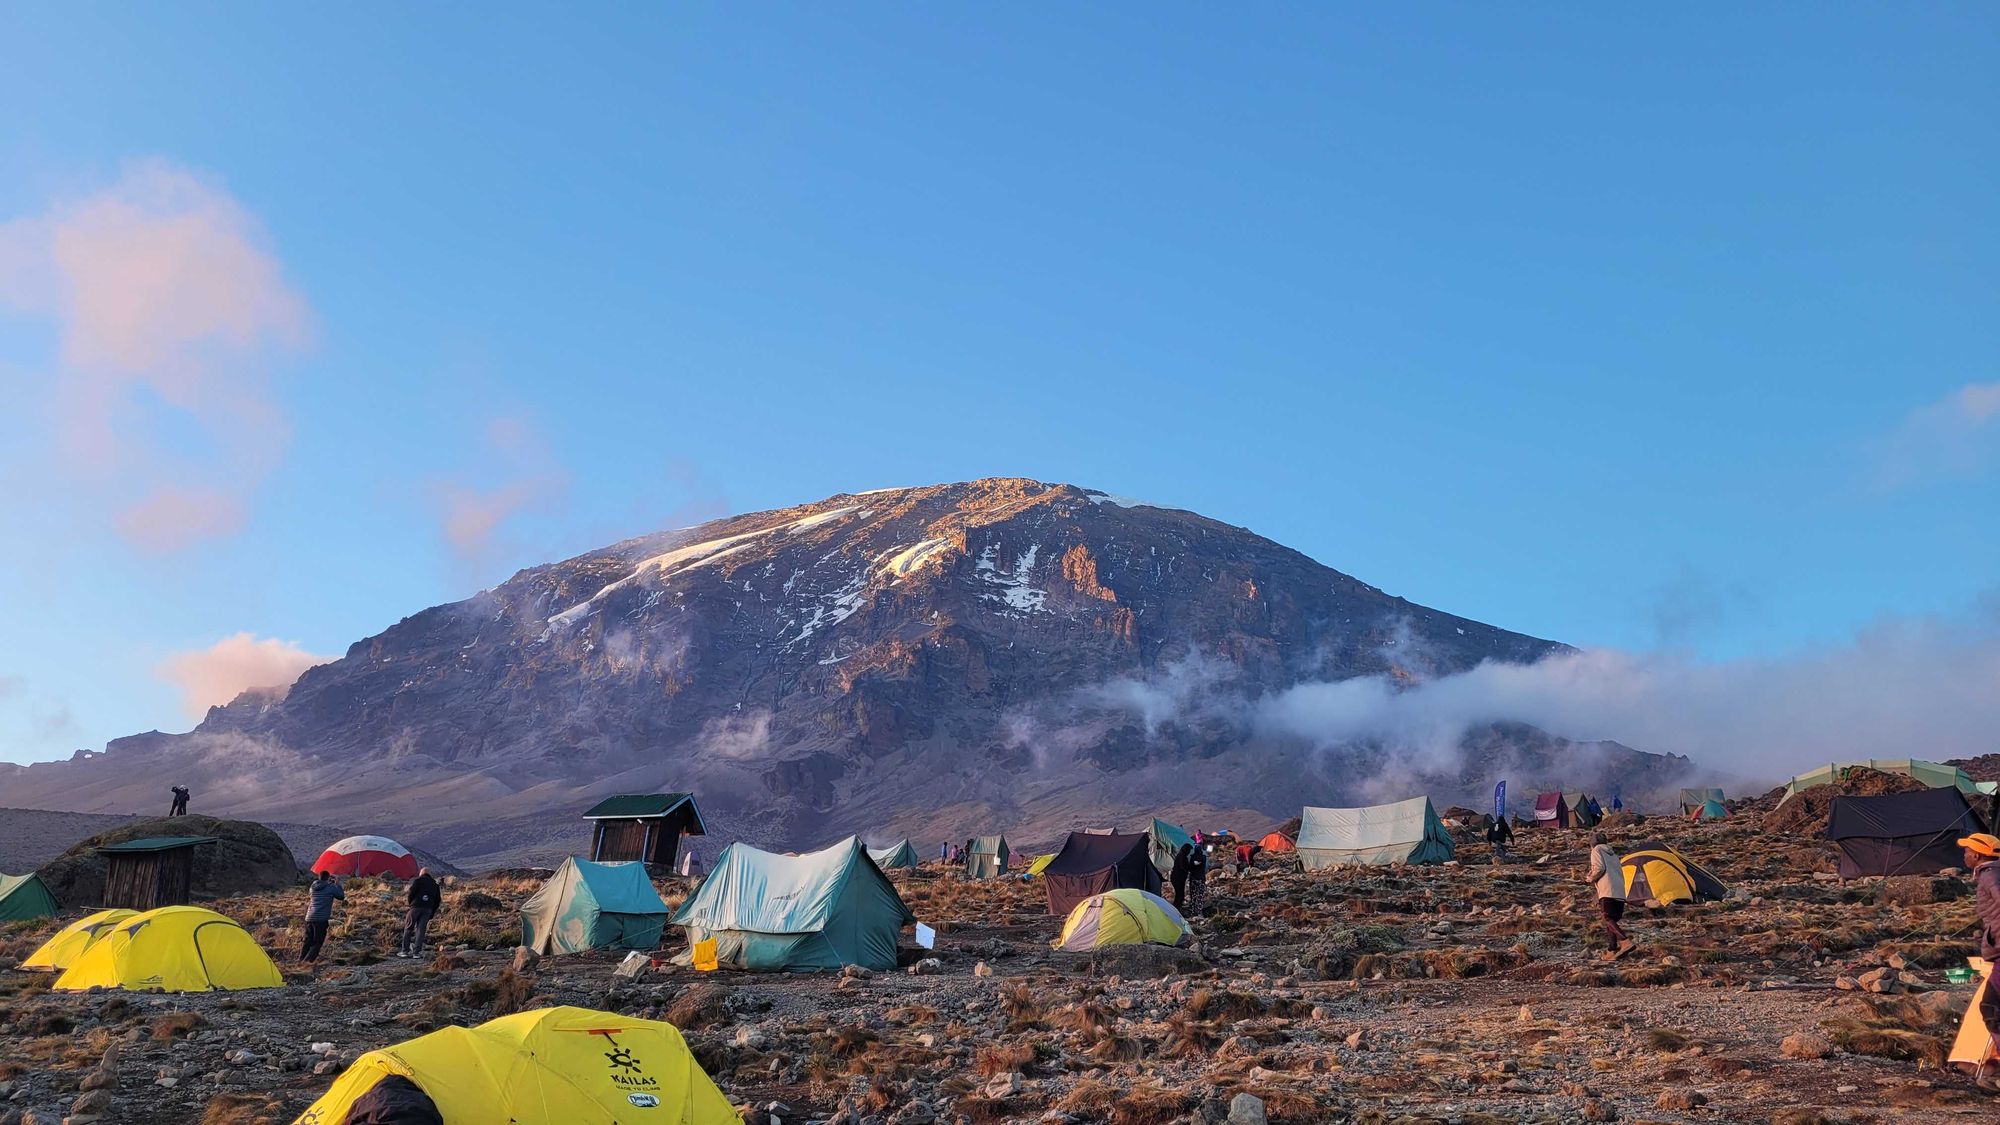 Climbing Kilimanjaro: Hiking the Machame Route to the Summit